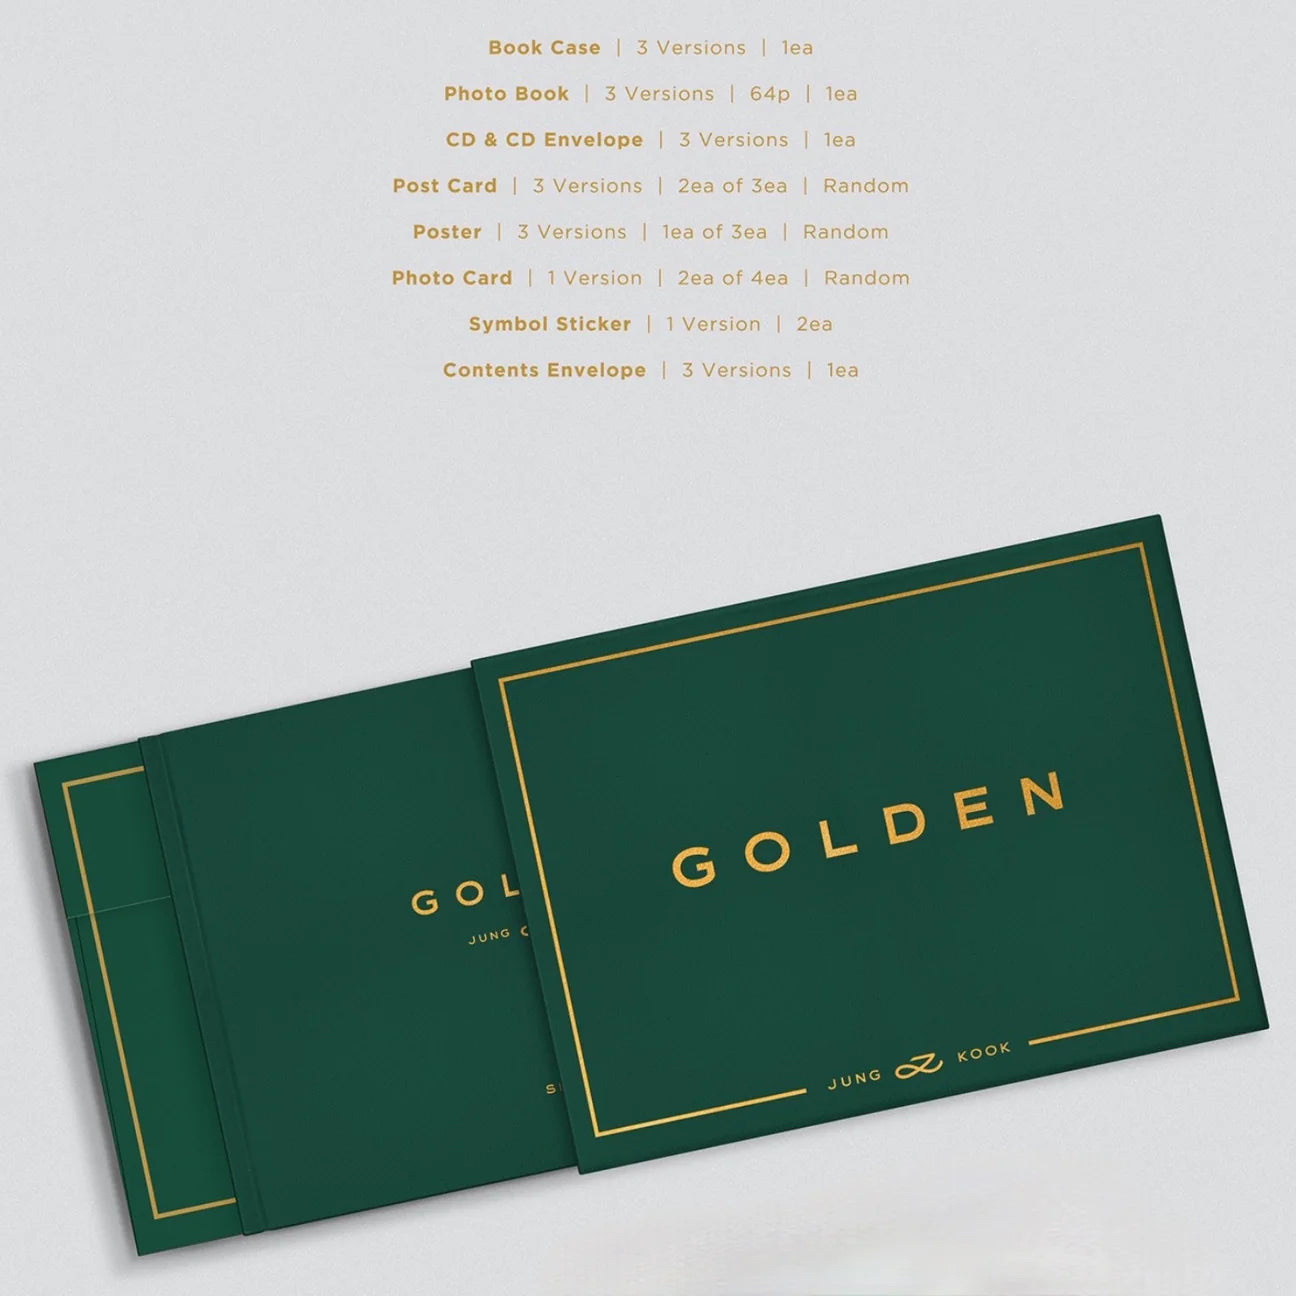 BTS JUNGKOOK Golden Album Official album